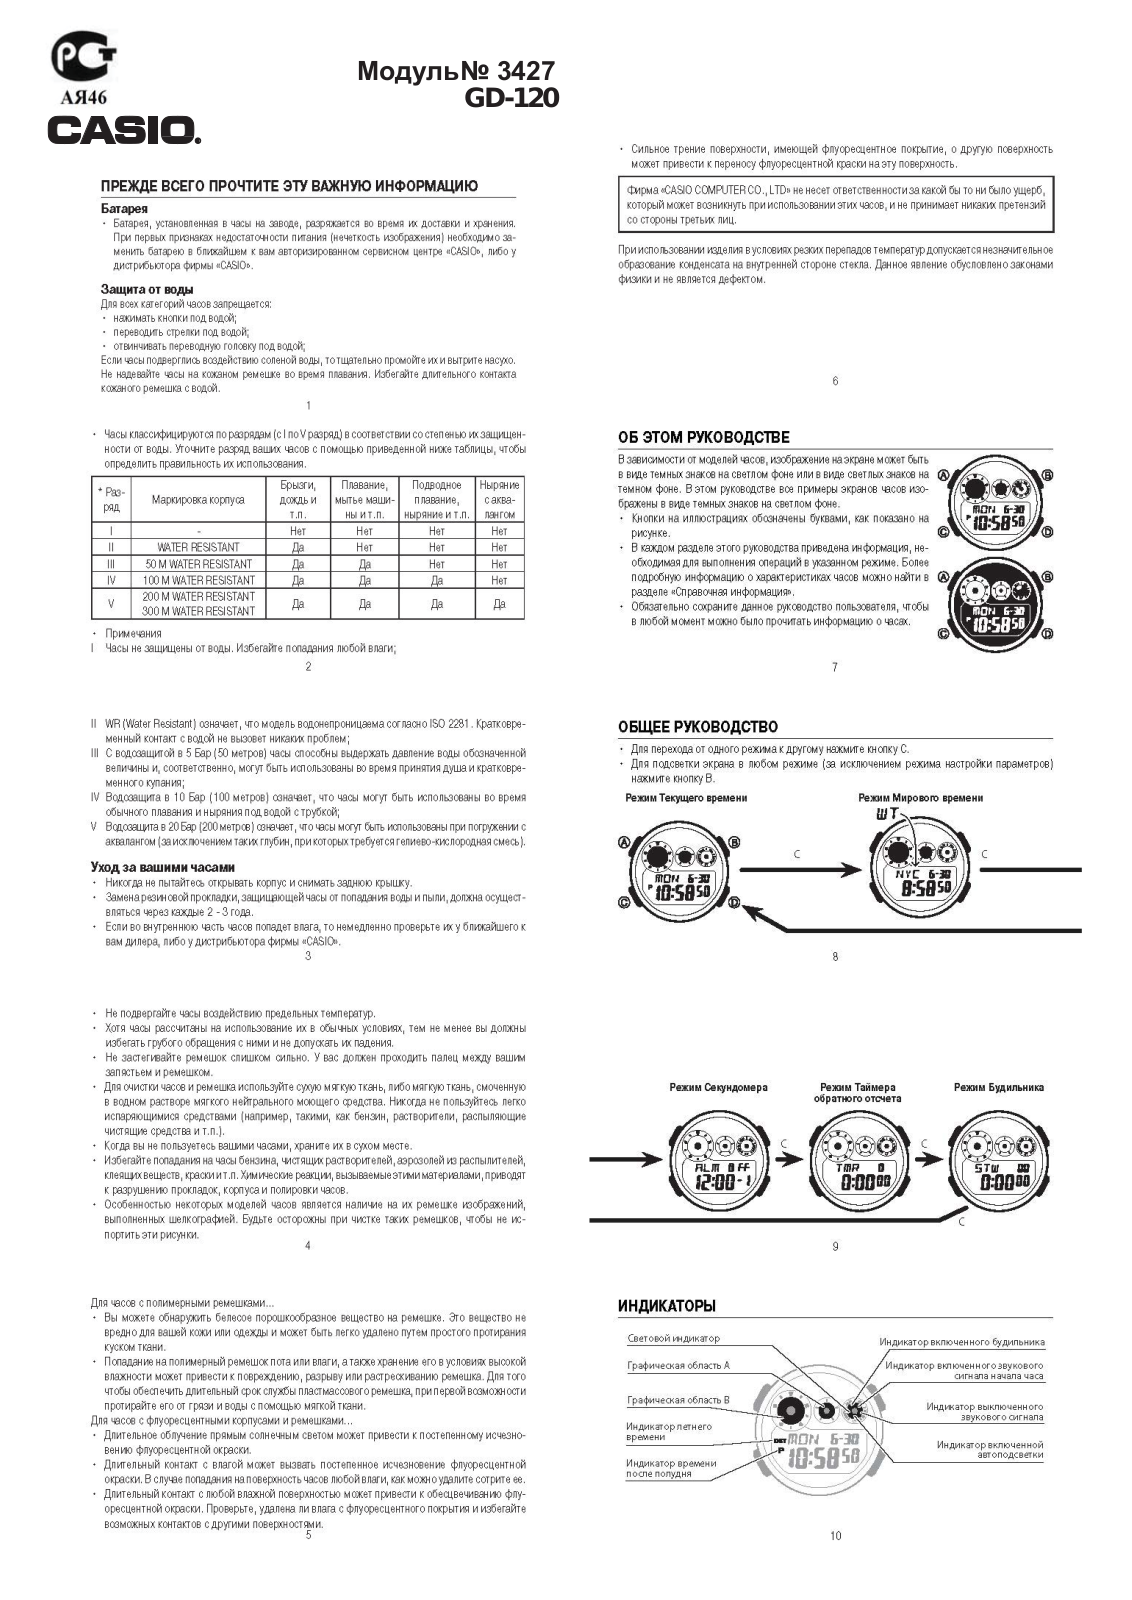 Casio GD-120BT-1E User Manual